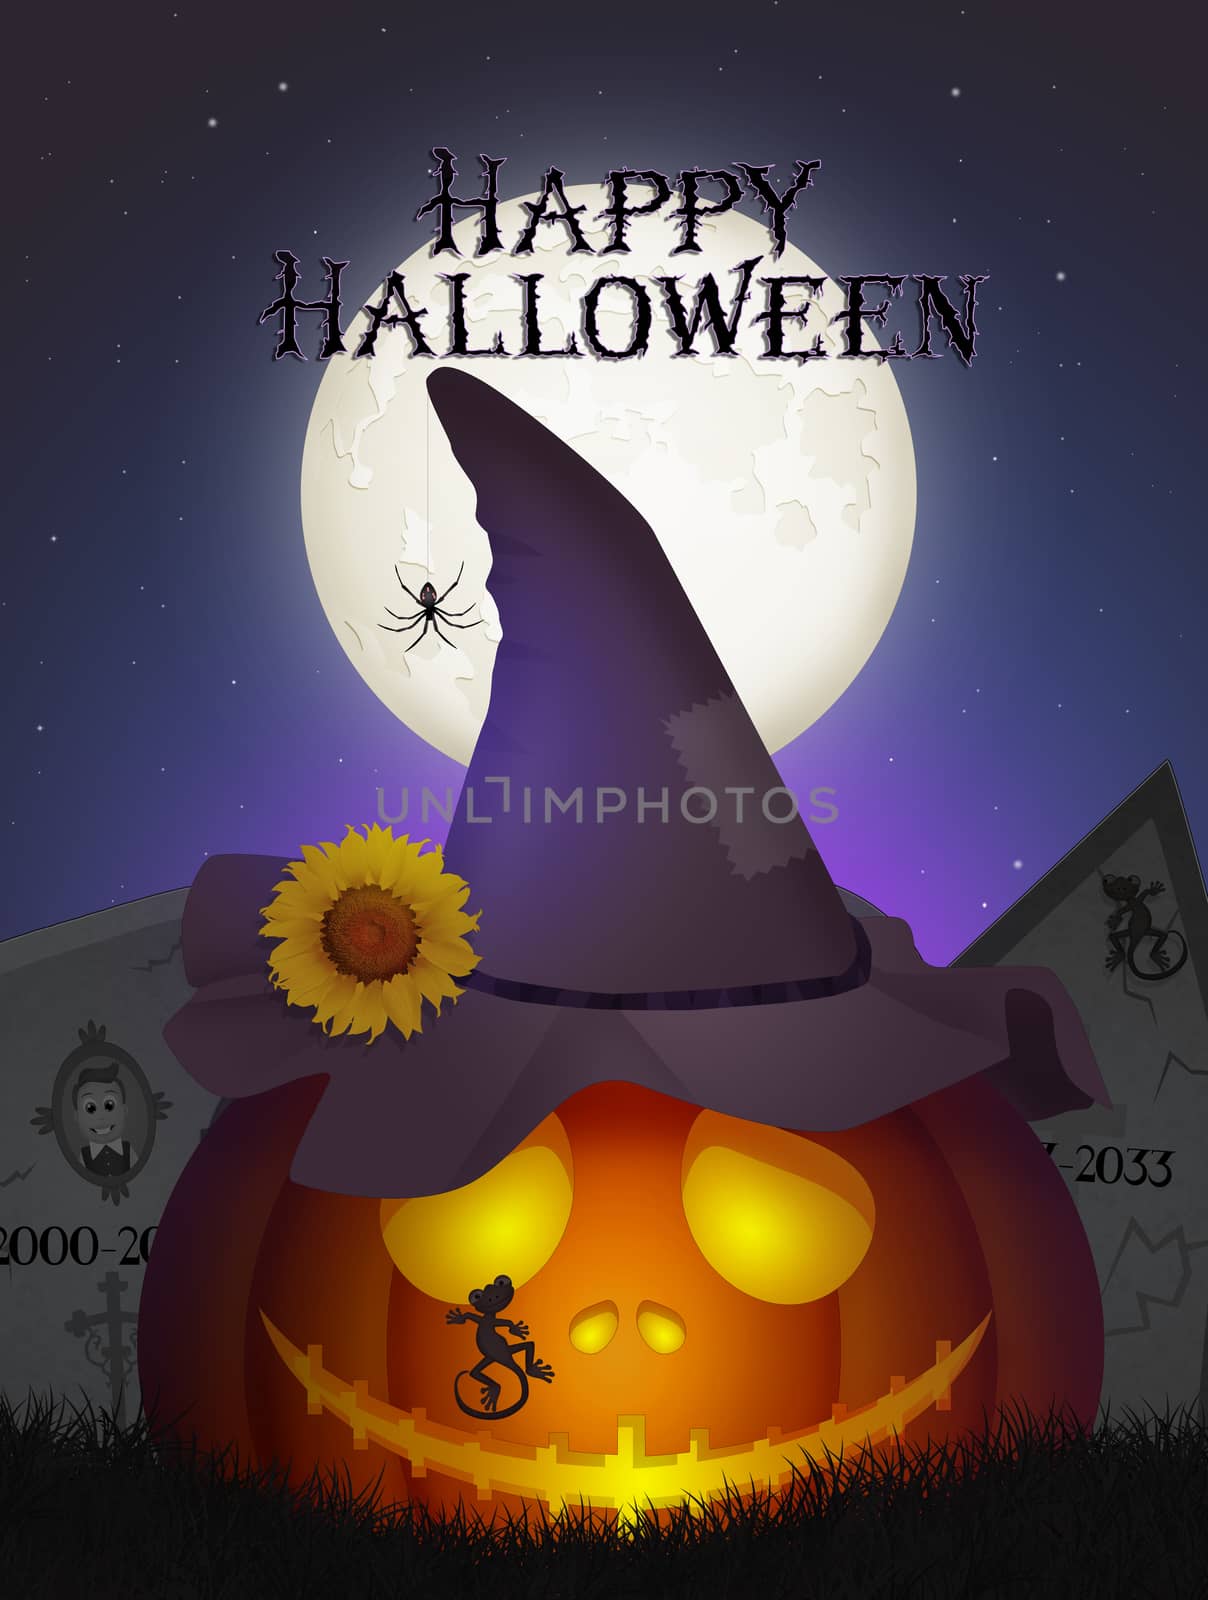 pumpkin in the Halloween night by adrenalina